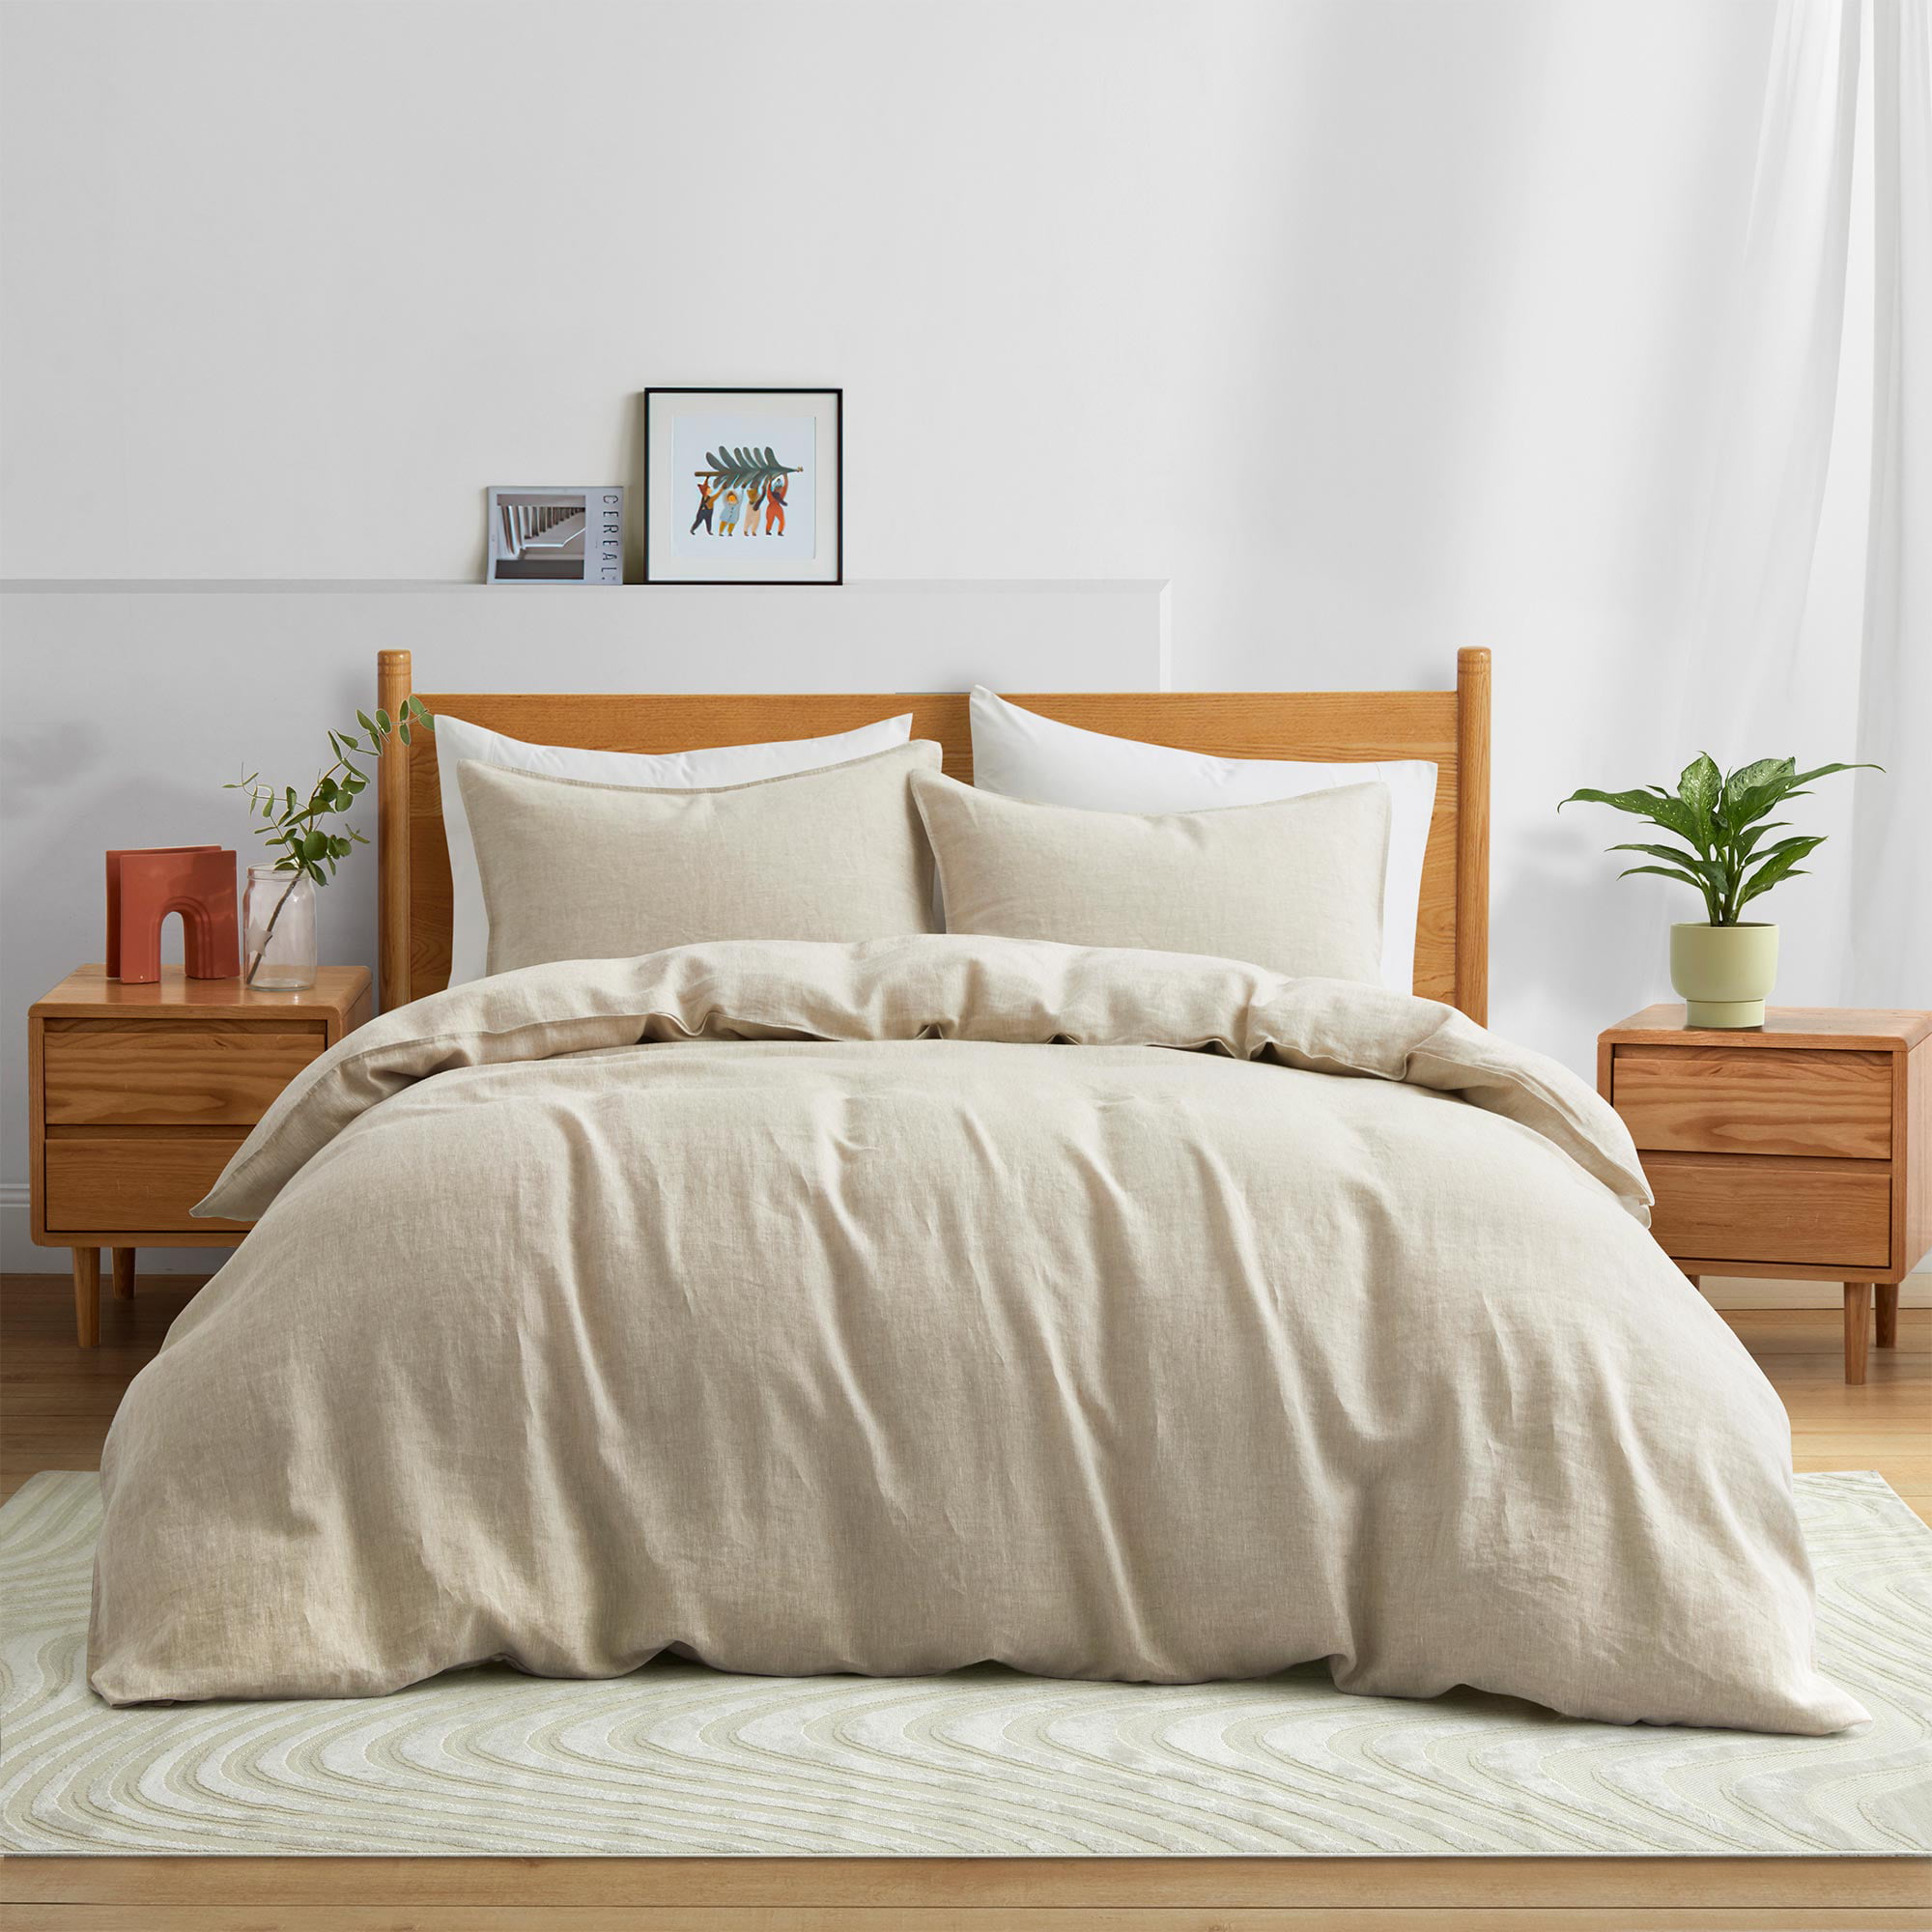 Soft Linen Handmade Baby Nest - Premium Quality & Comfort, Beige